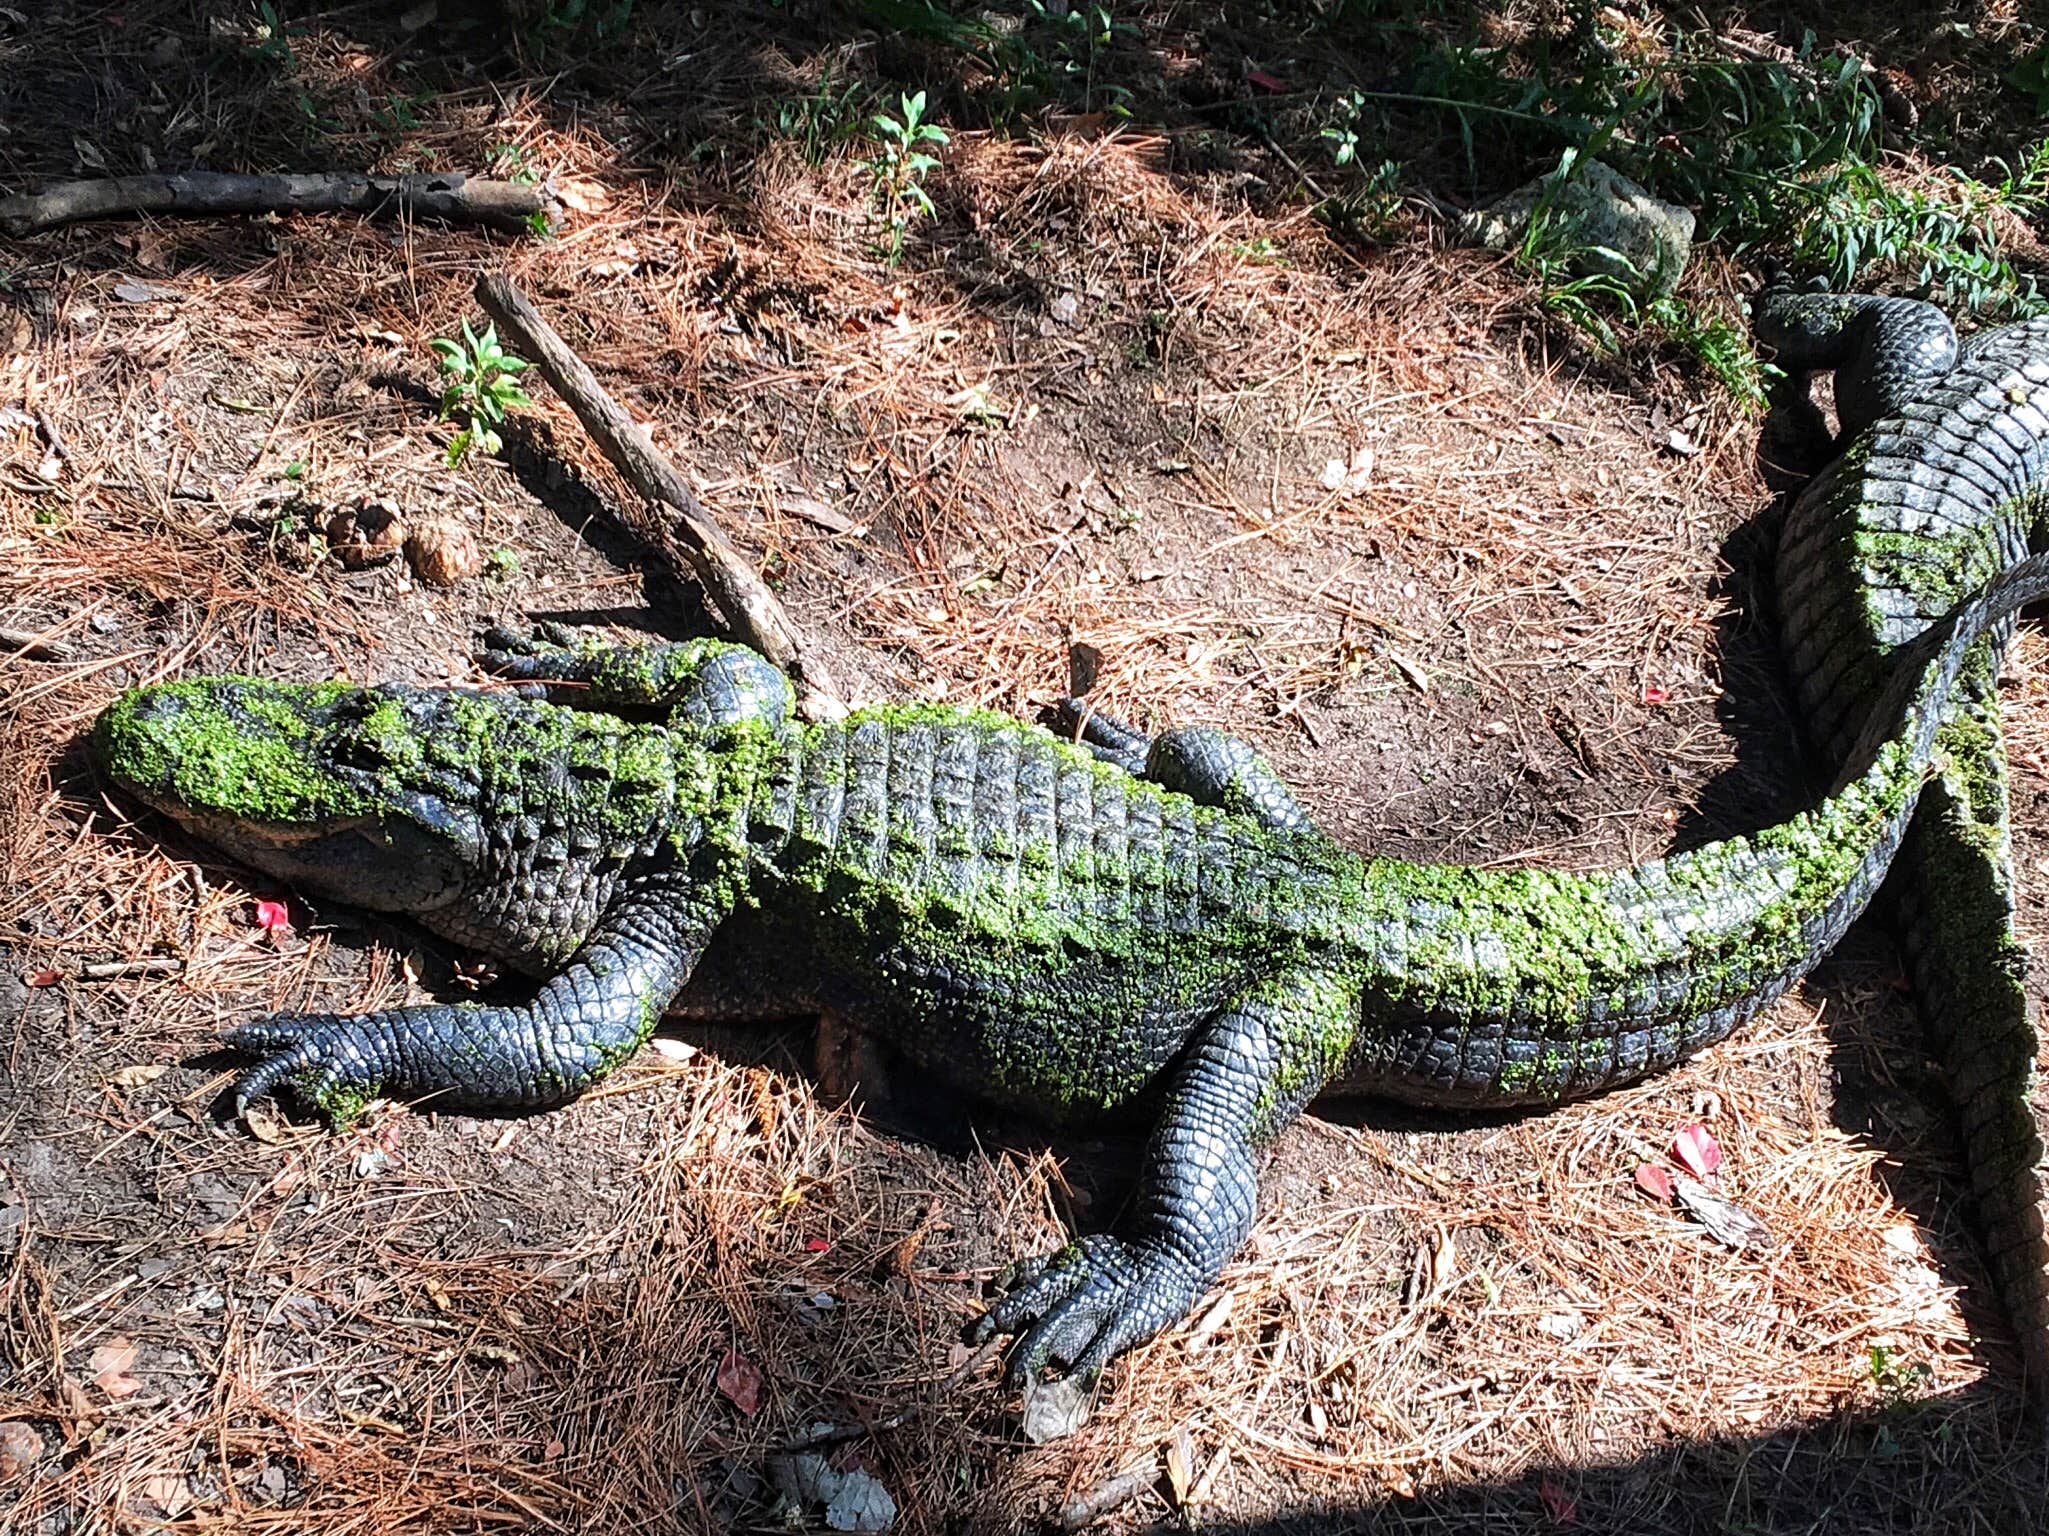 Nice alligator exhibit